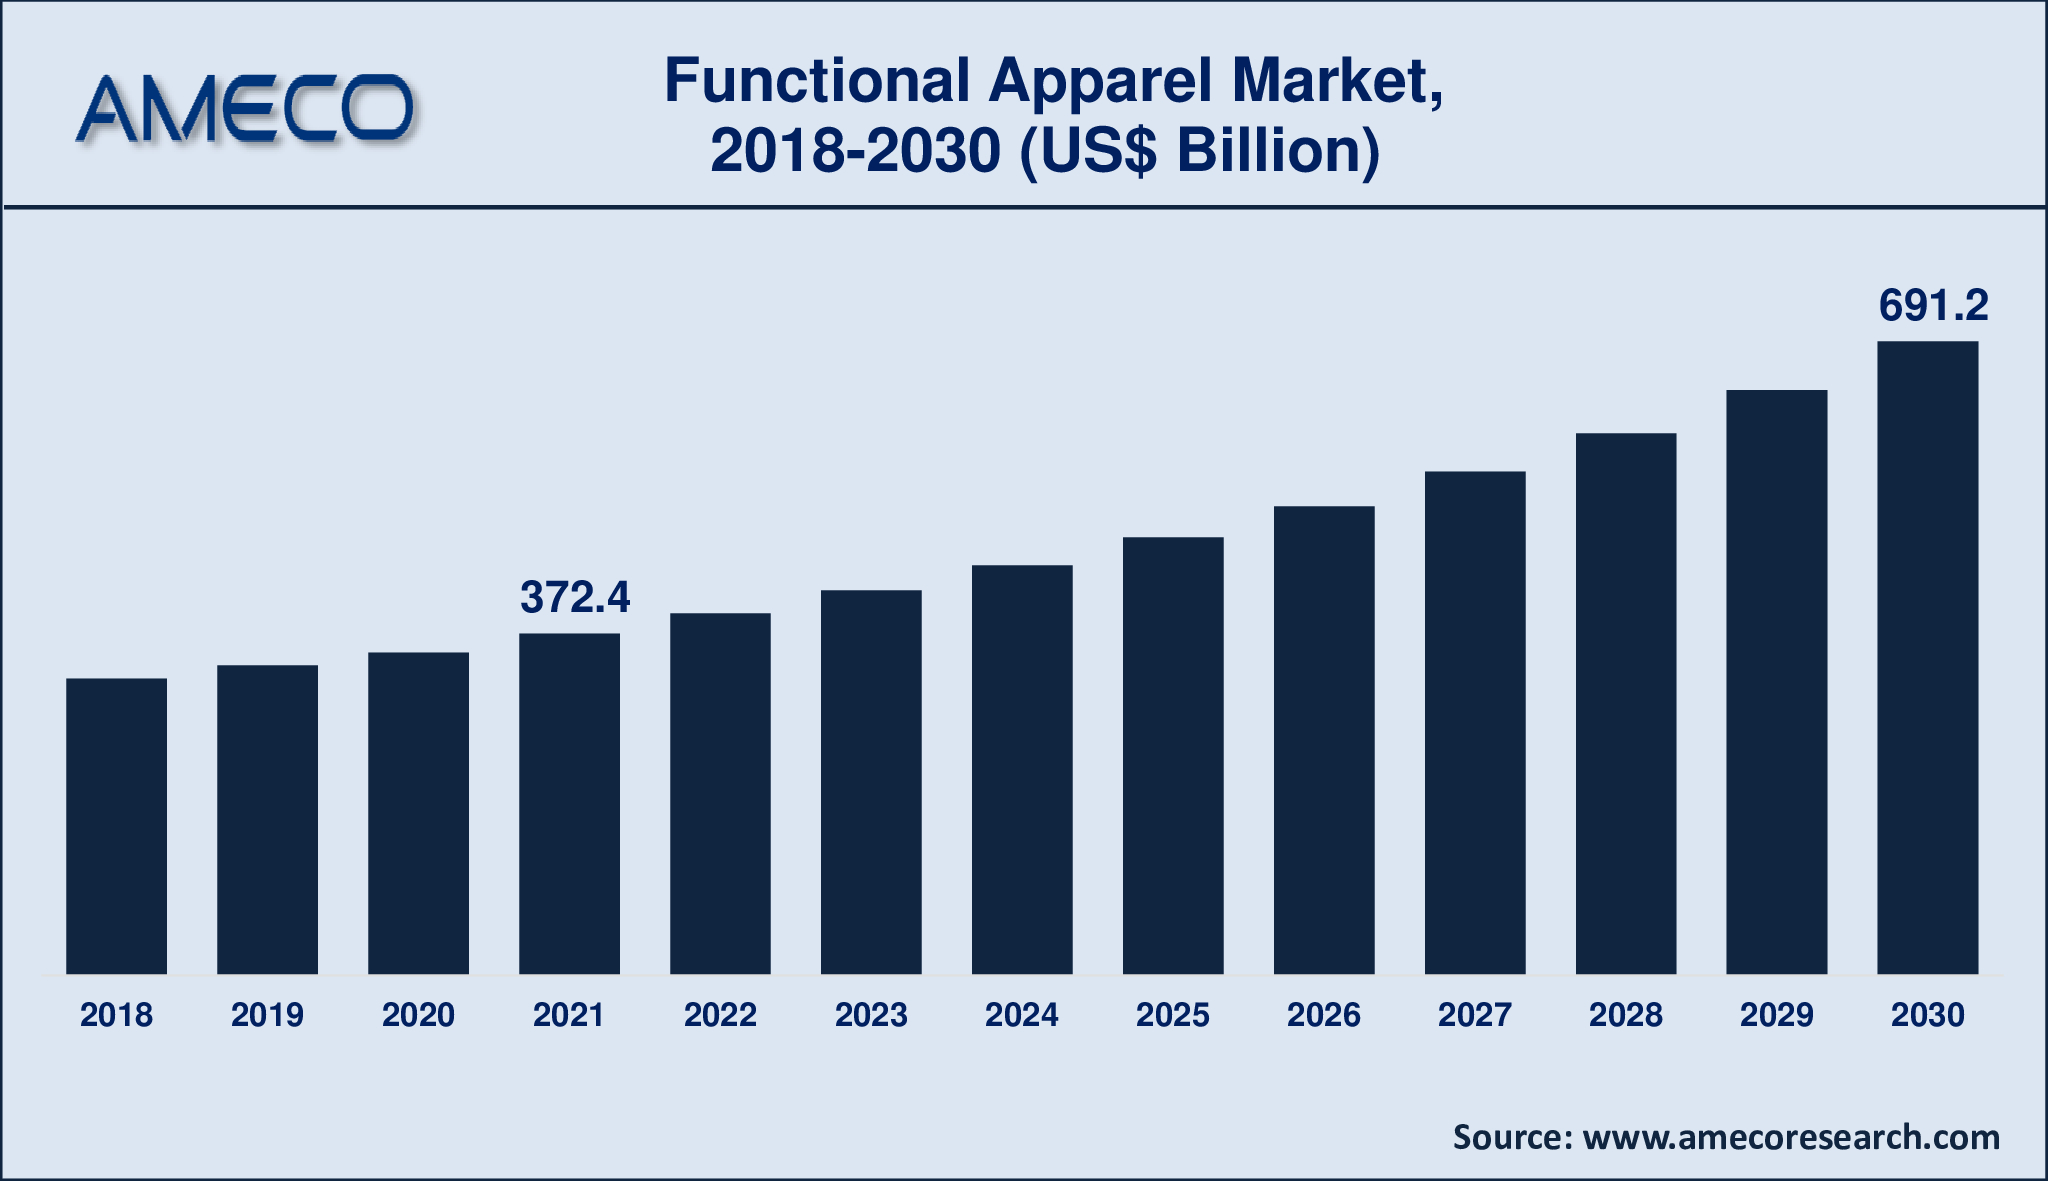 Functional Apparel Market Dynamics